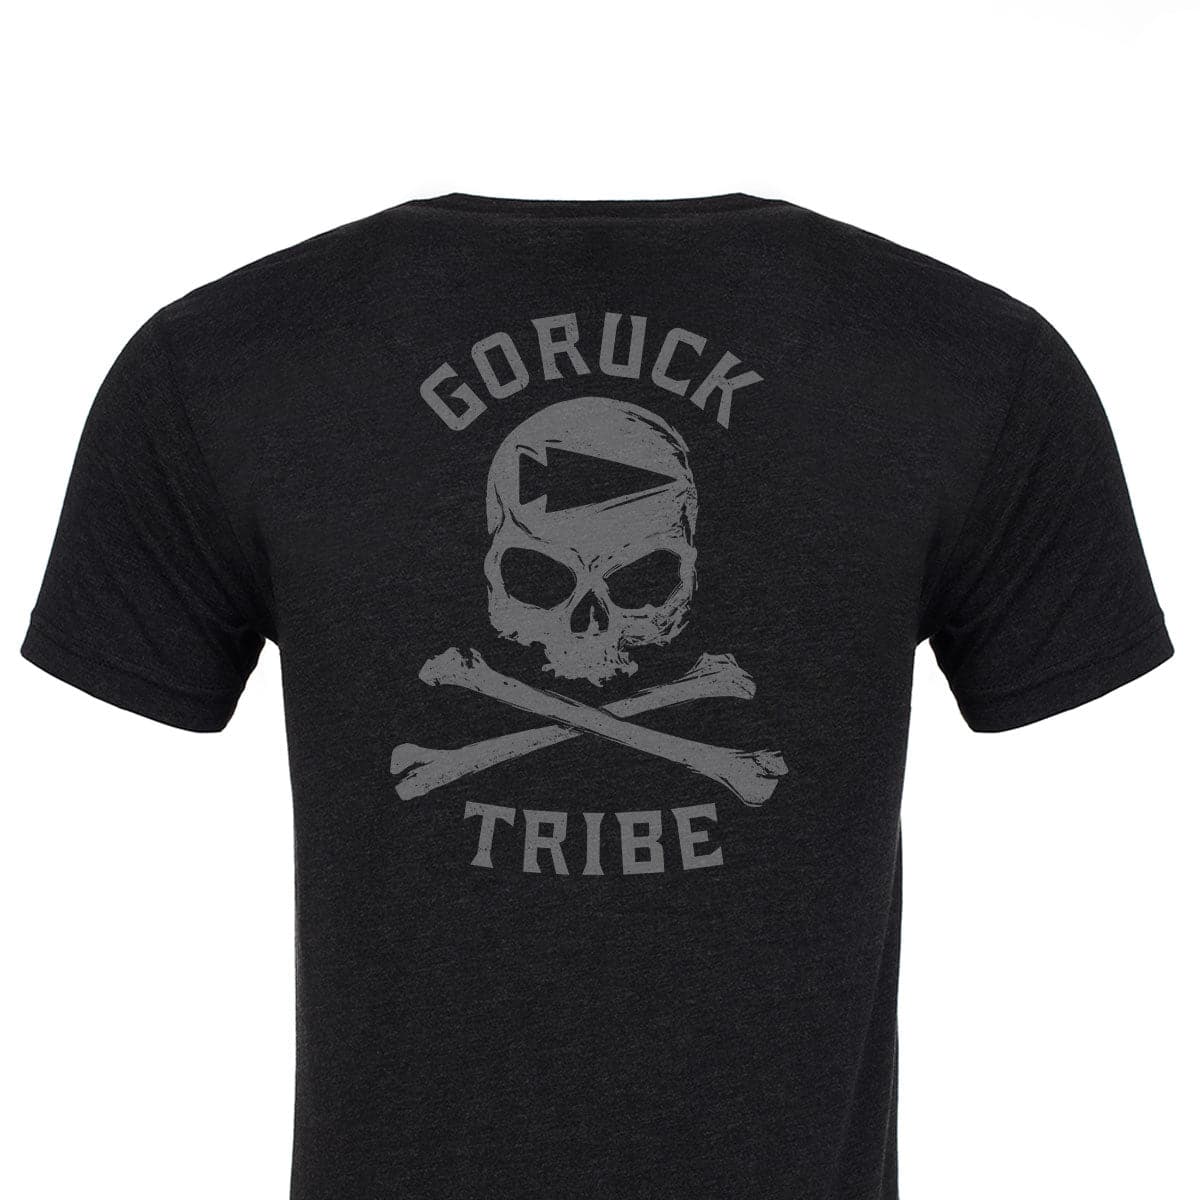 T-shirt - GORUCK Tribe